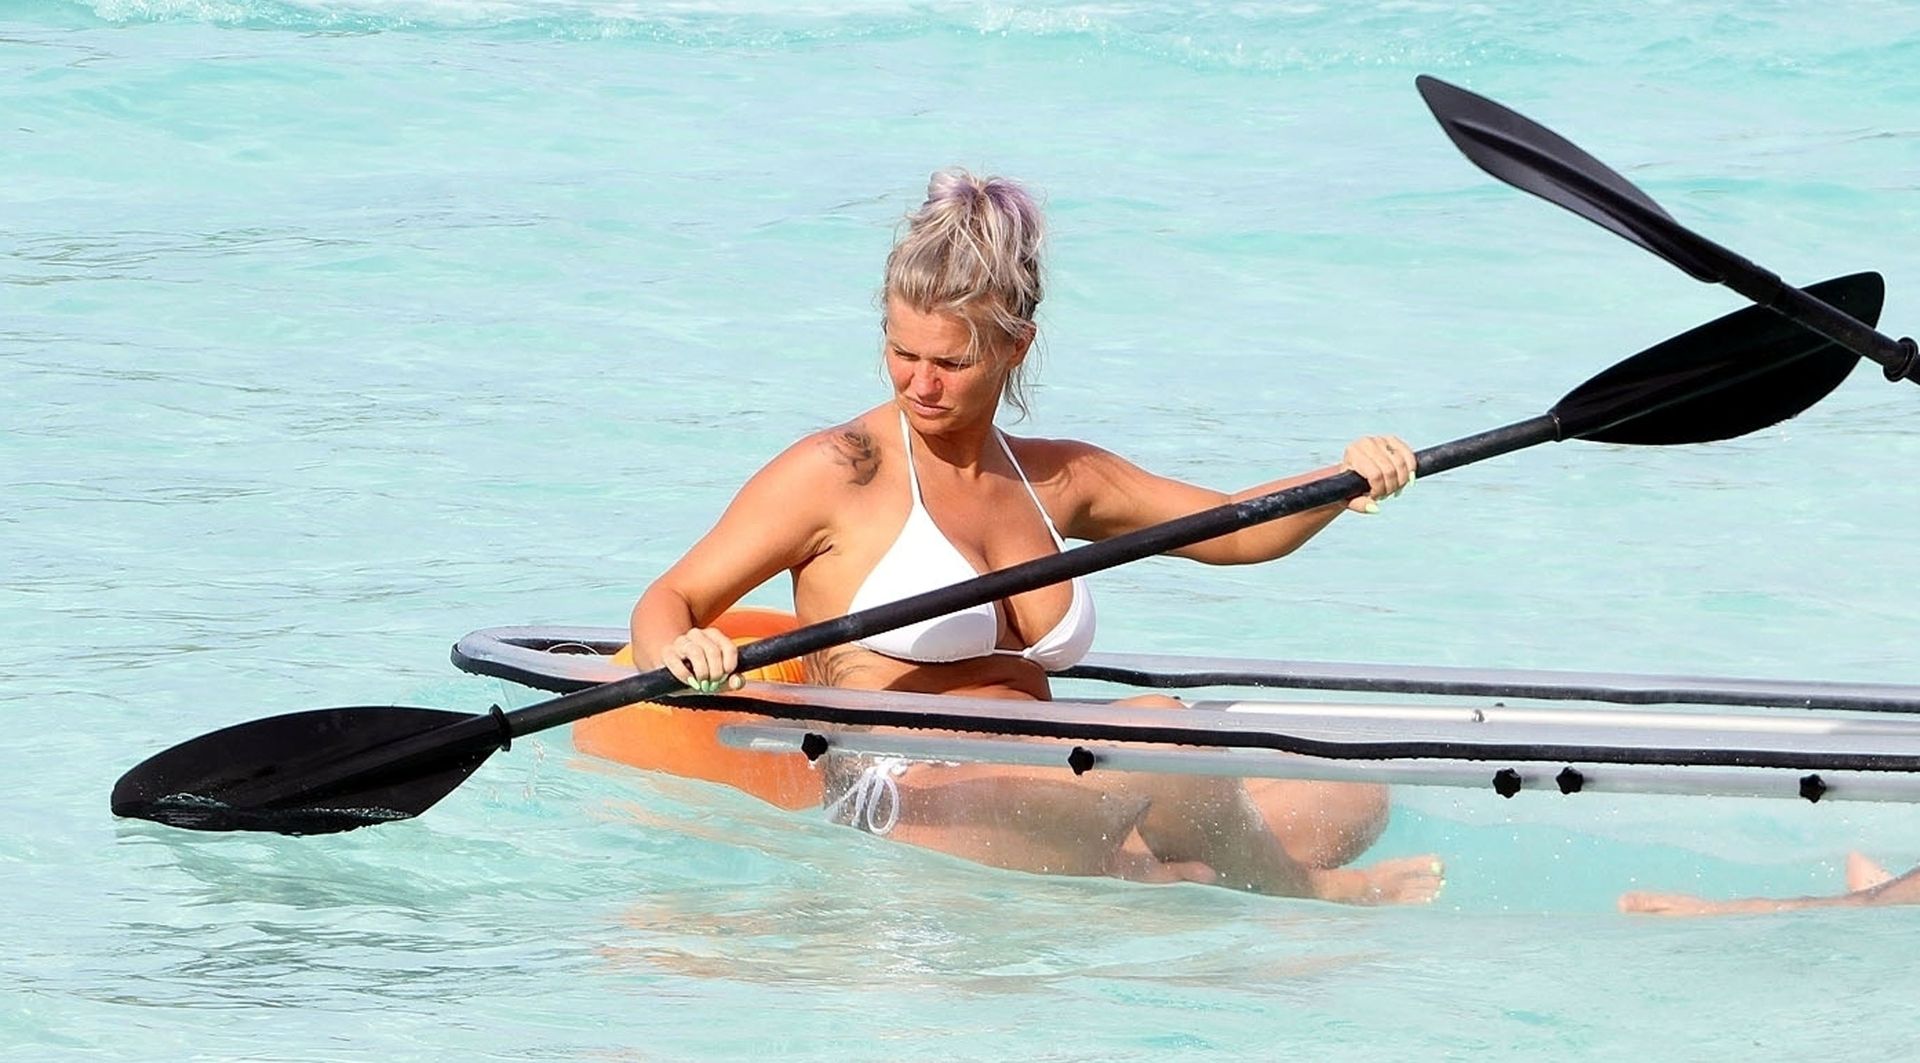 Kerry Katona & Ryan Mahoney Jump in a Canoe for Some Fun in the Indian Ocean (44 Photos)